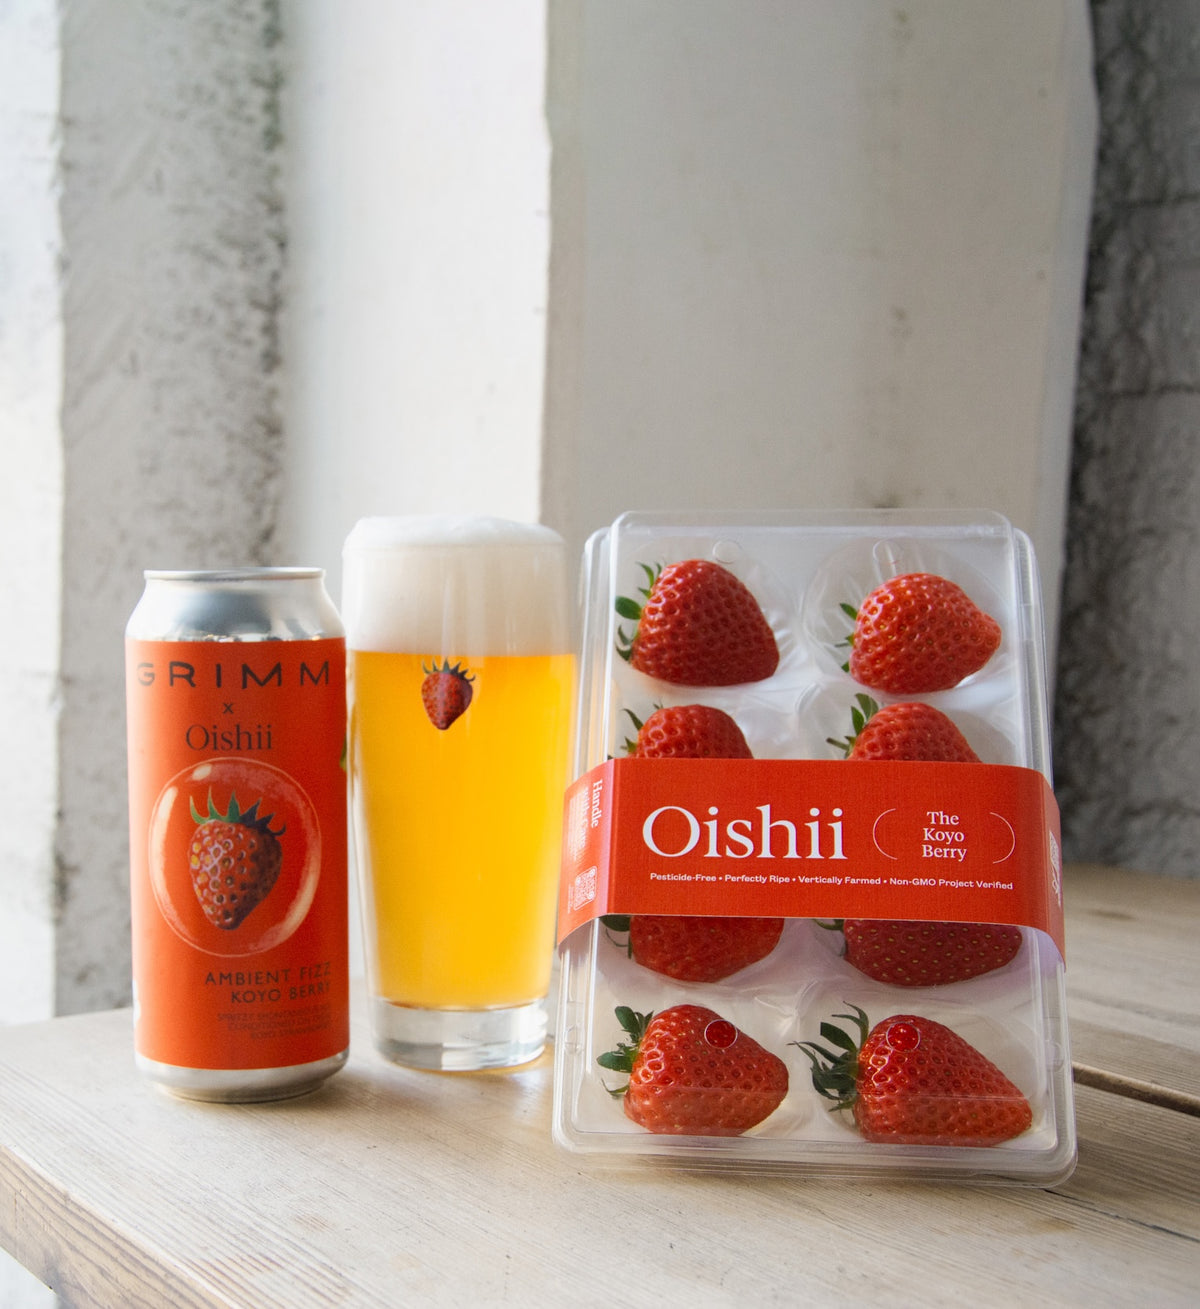 Oishii + Grimm Ambient Fizz: Koyo Berry